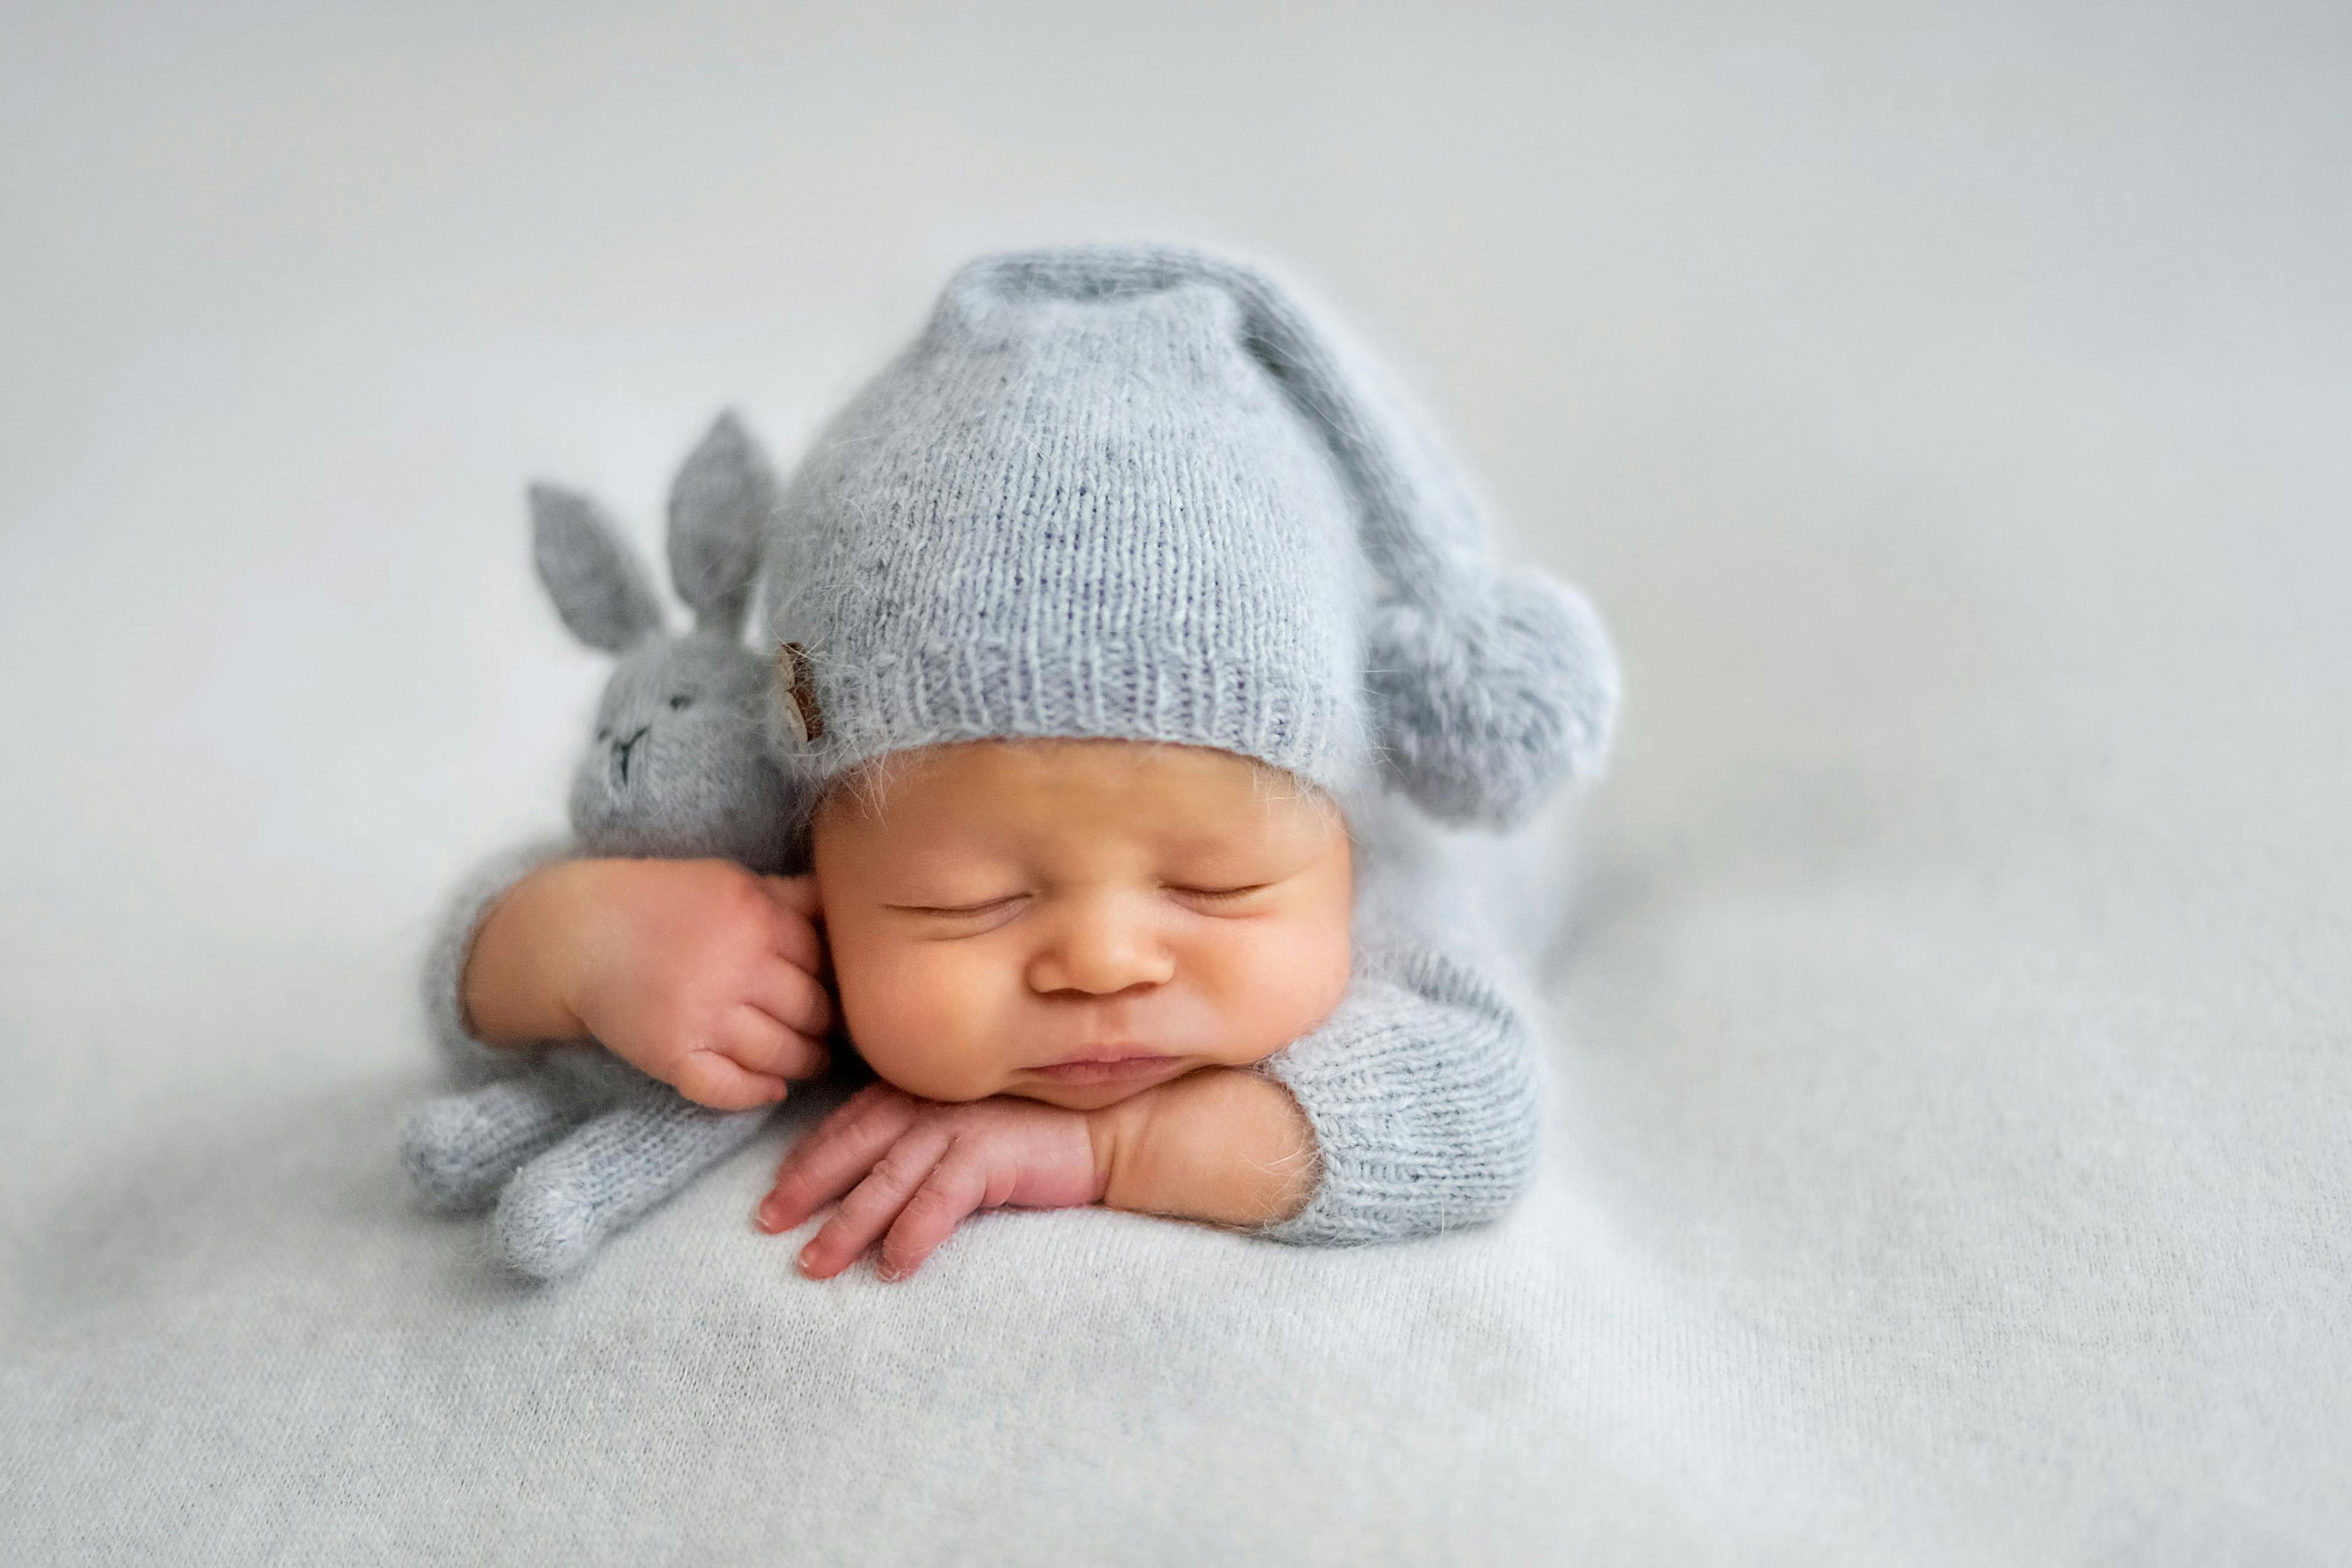 Sleeping newborn boy in first days of life: © Oksana - stock.adobe.com